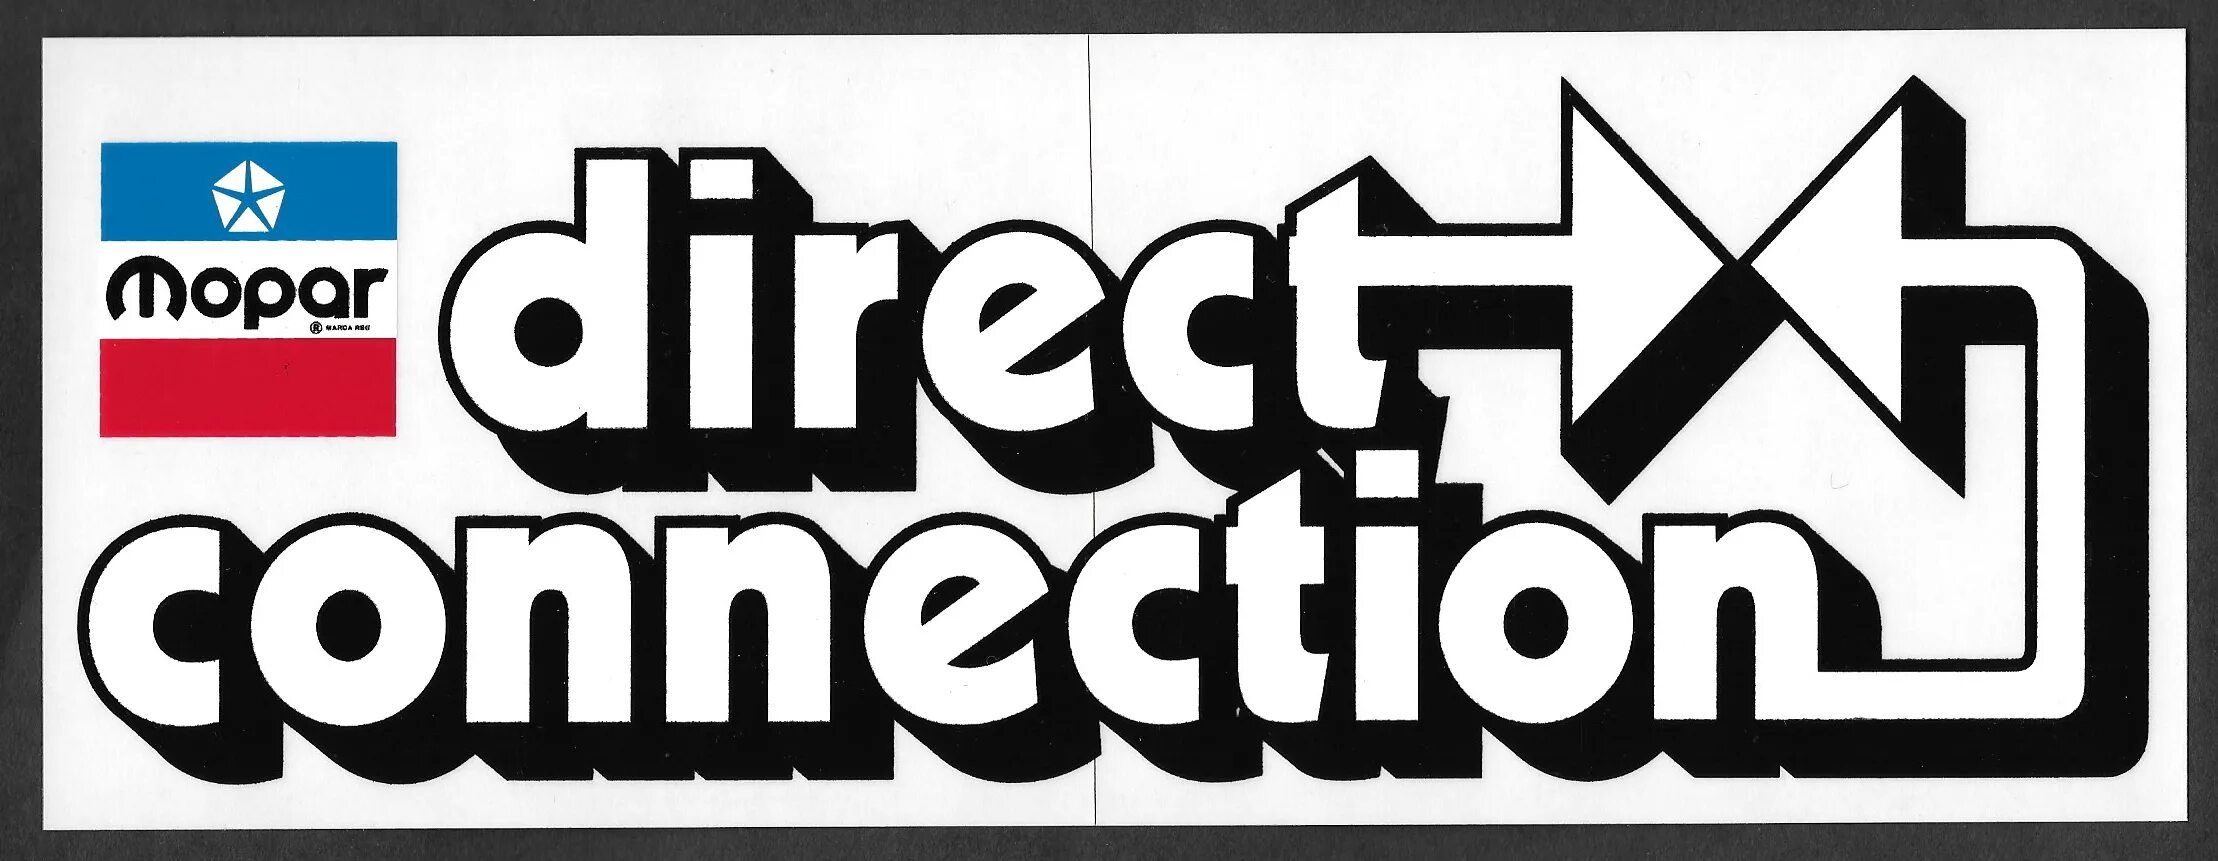 Directly connected. Final connection логотип. Final connection наклейка. Mopar logo. Наклейка машины Партс директ.